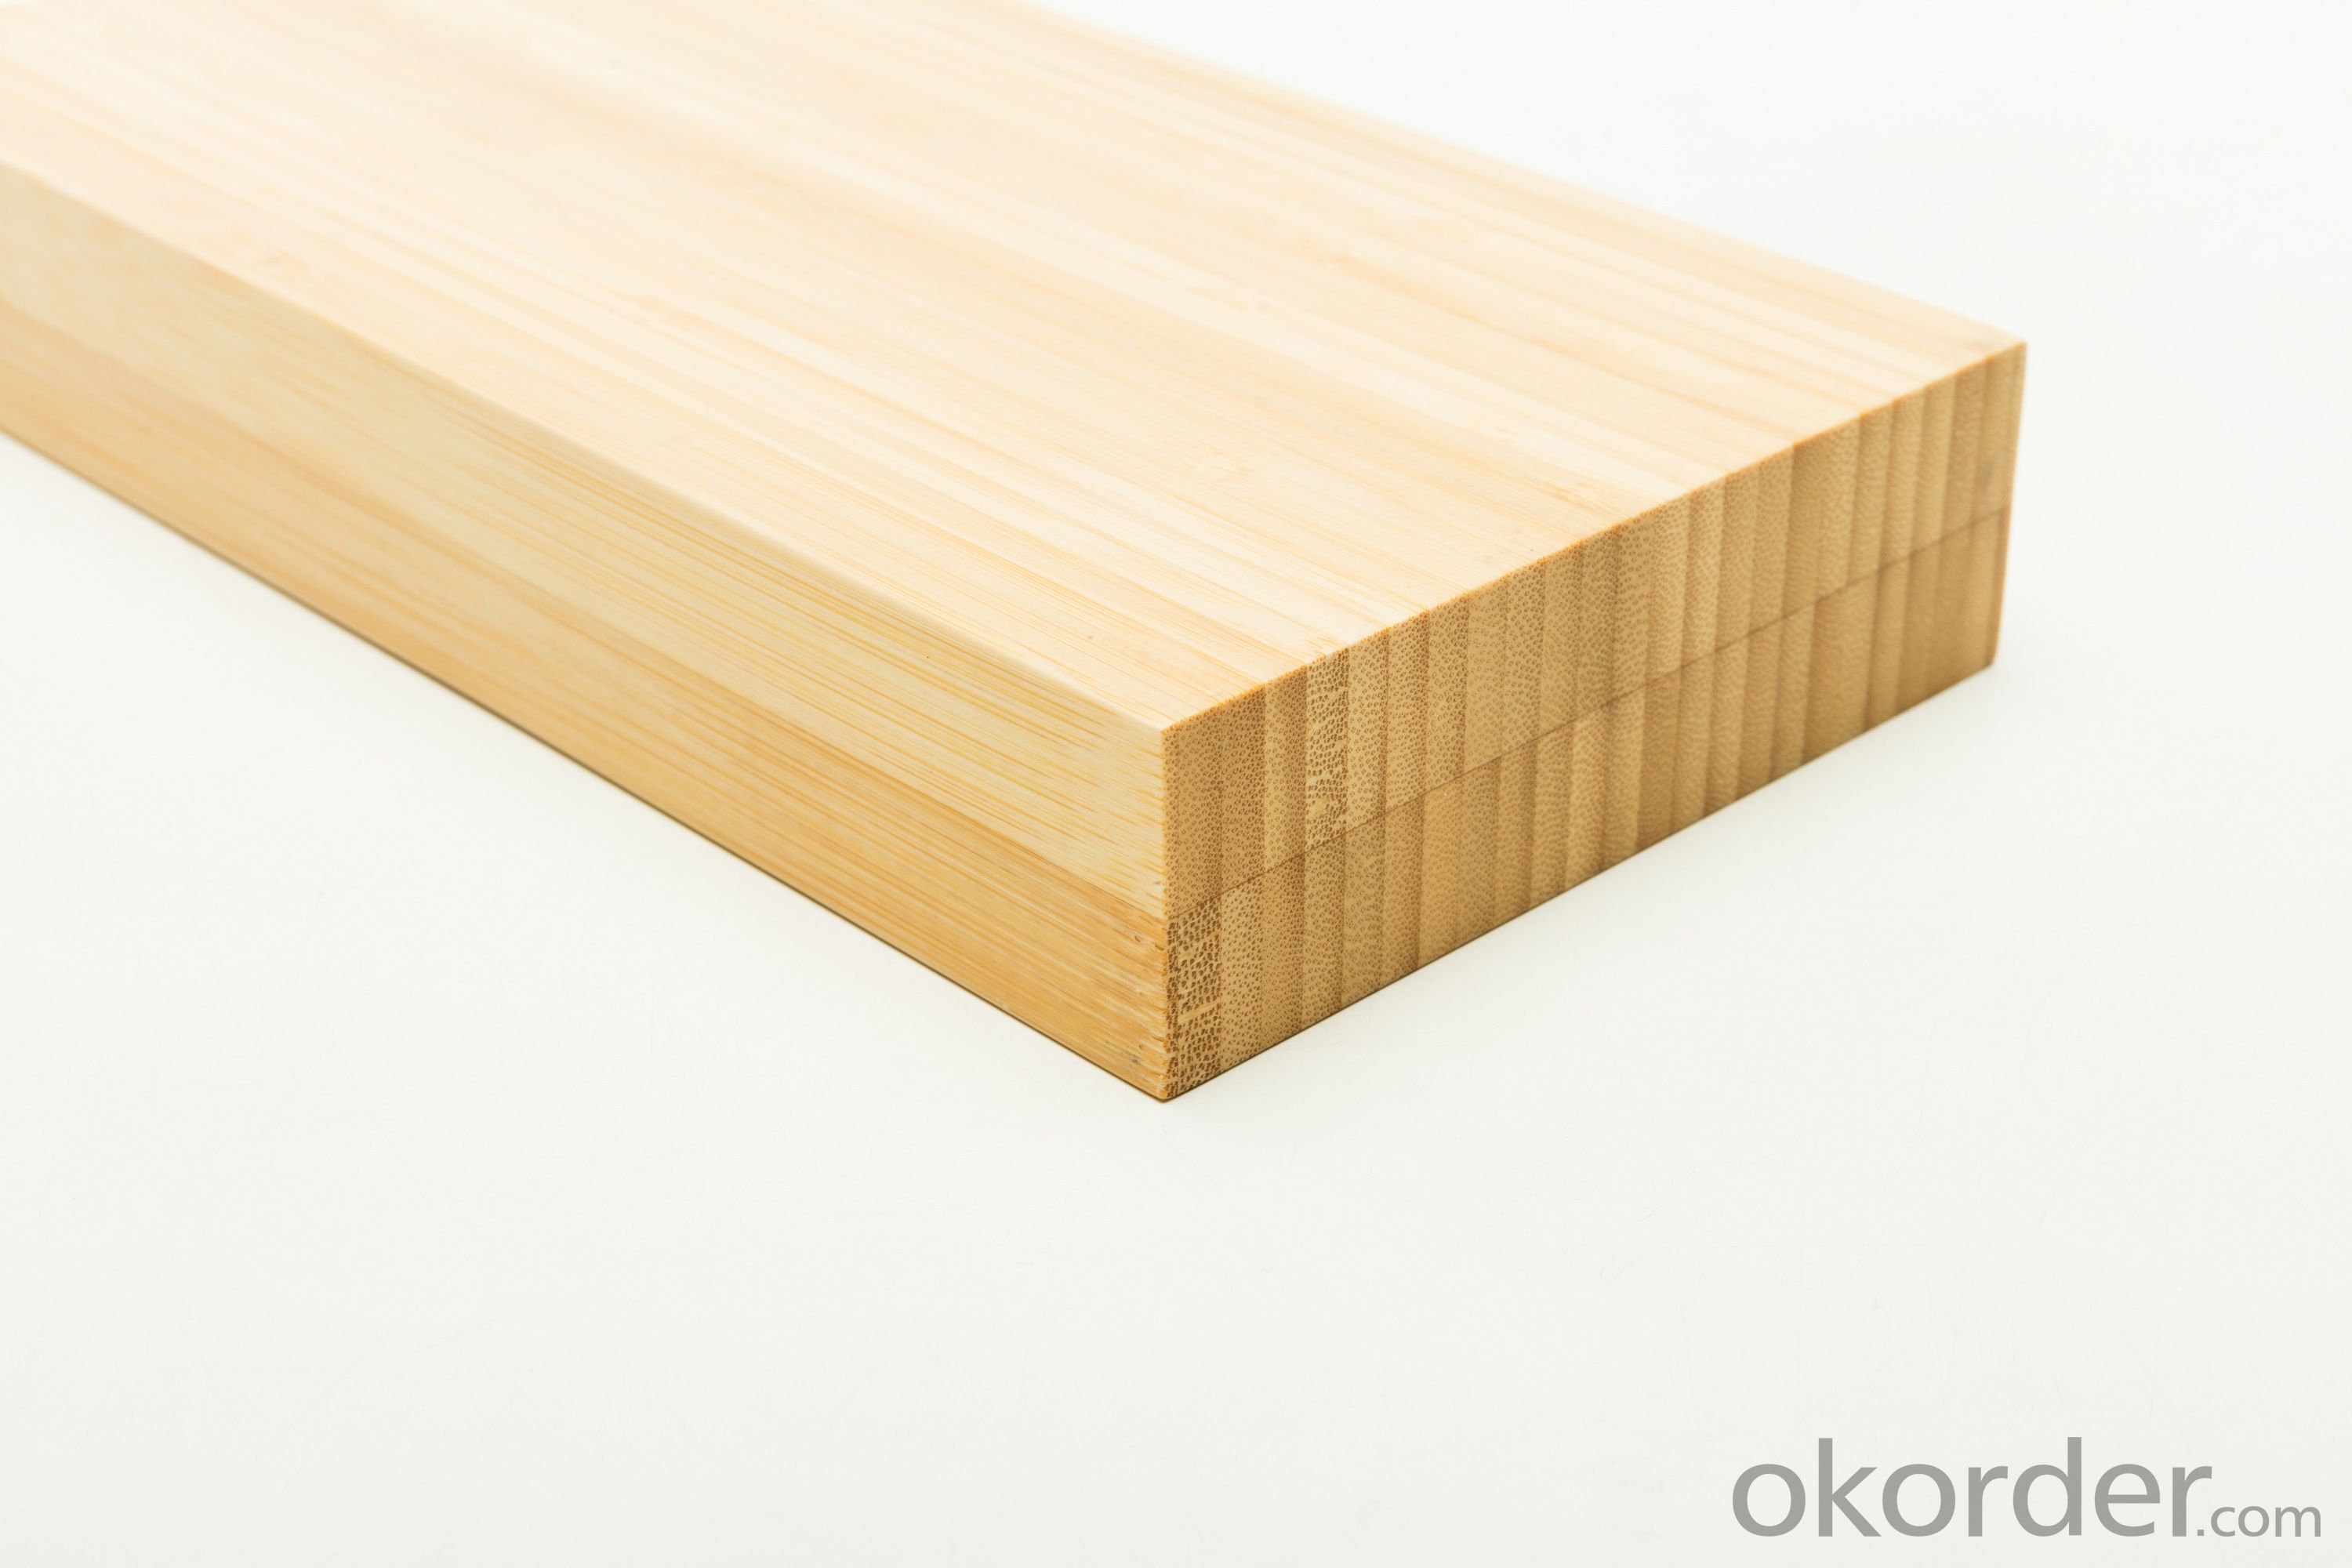  Bamboo  Wood Engineered  Lumber Eco Building Material 